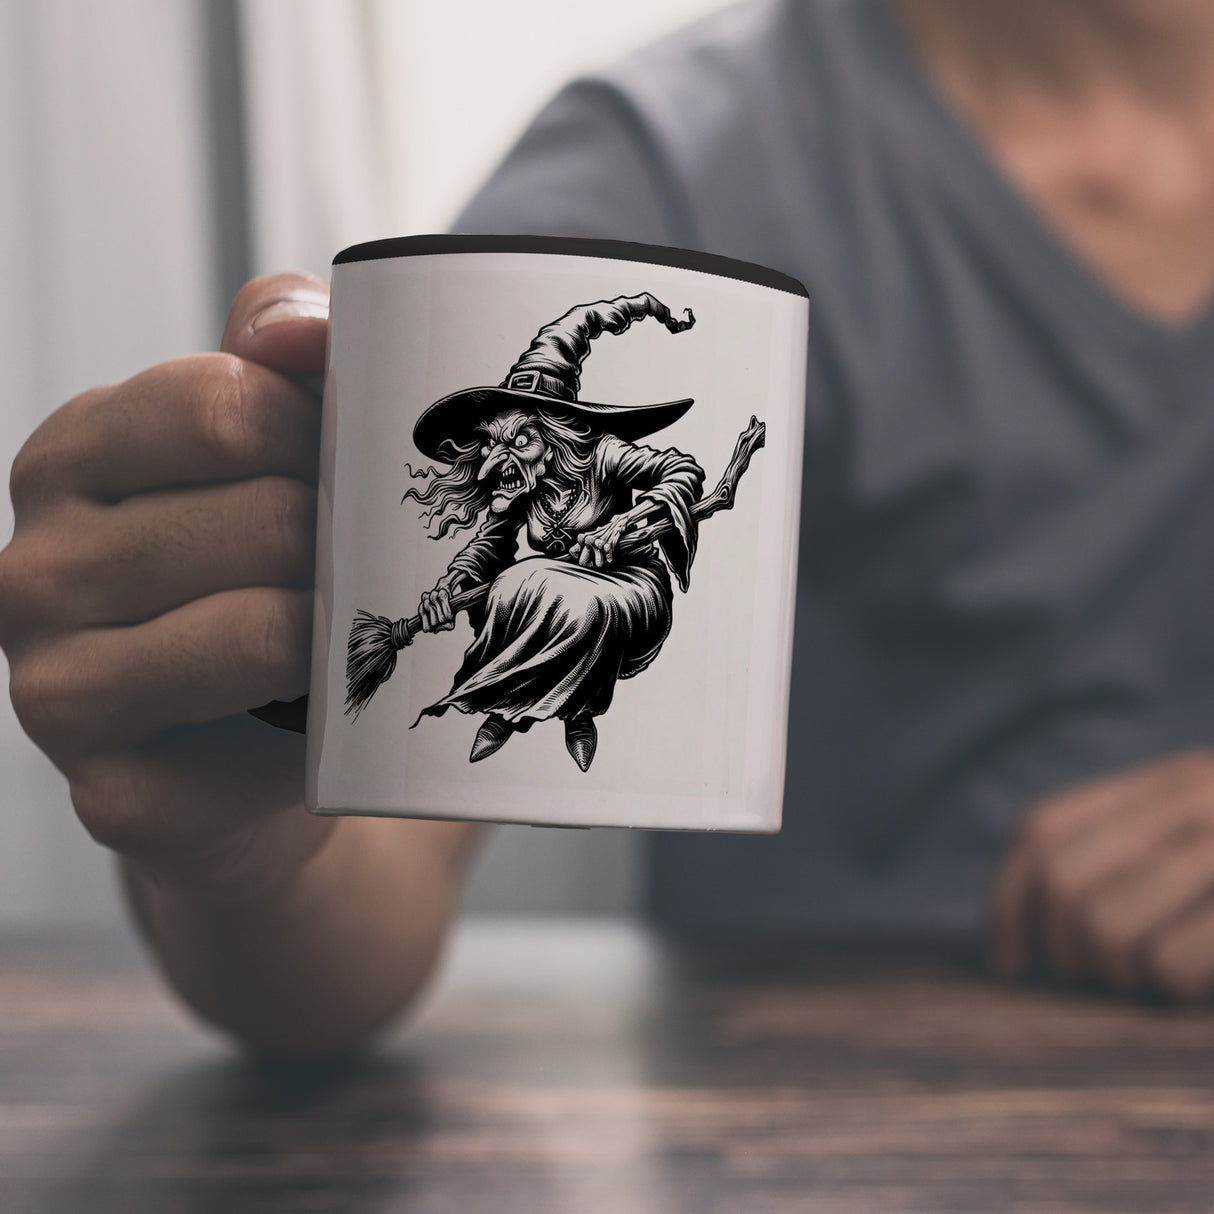 Böse Hexe auf Besen Kaffeebecher